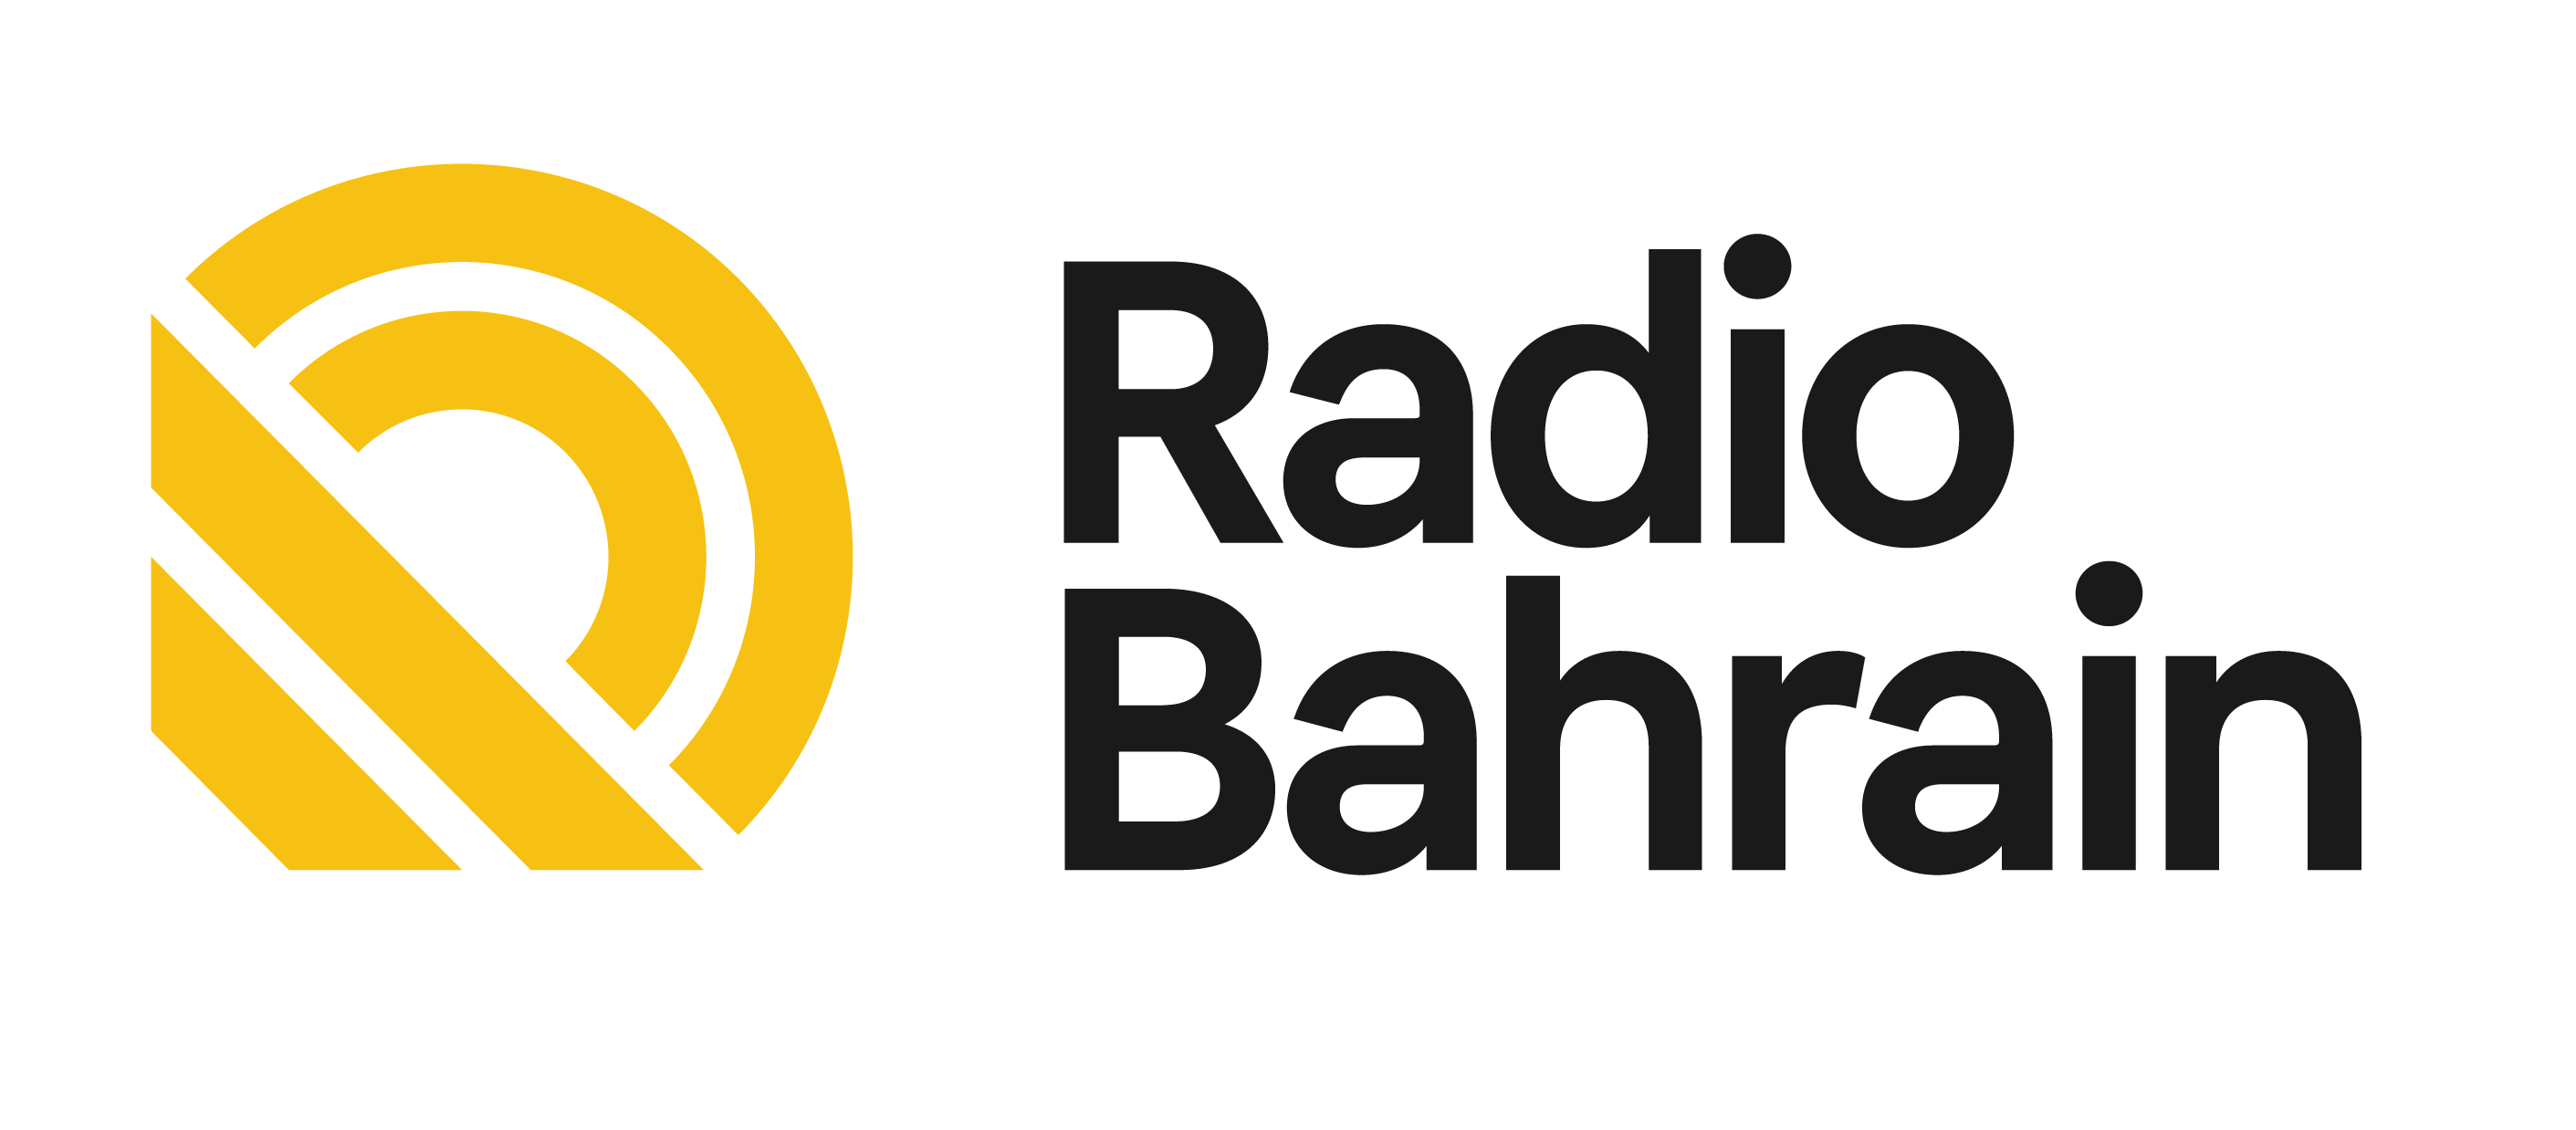 96.5 Radio Bahrain - We Play The Hits! Logo